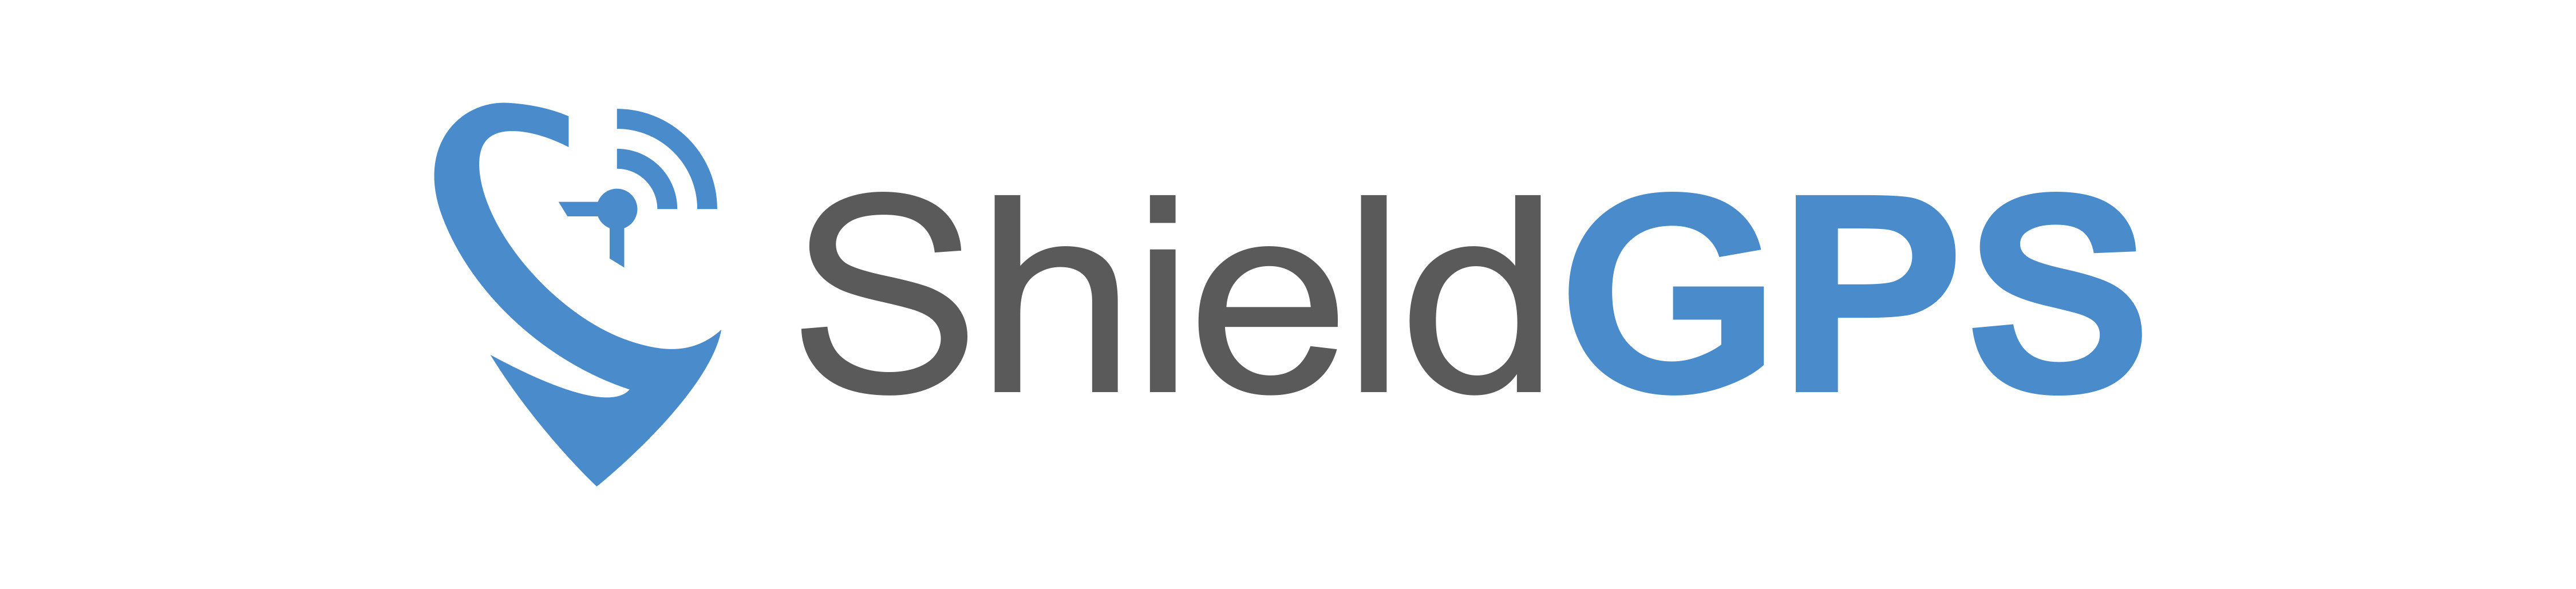 ShieldGPS Help Center home page